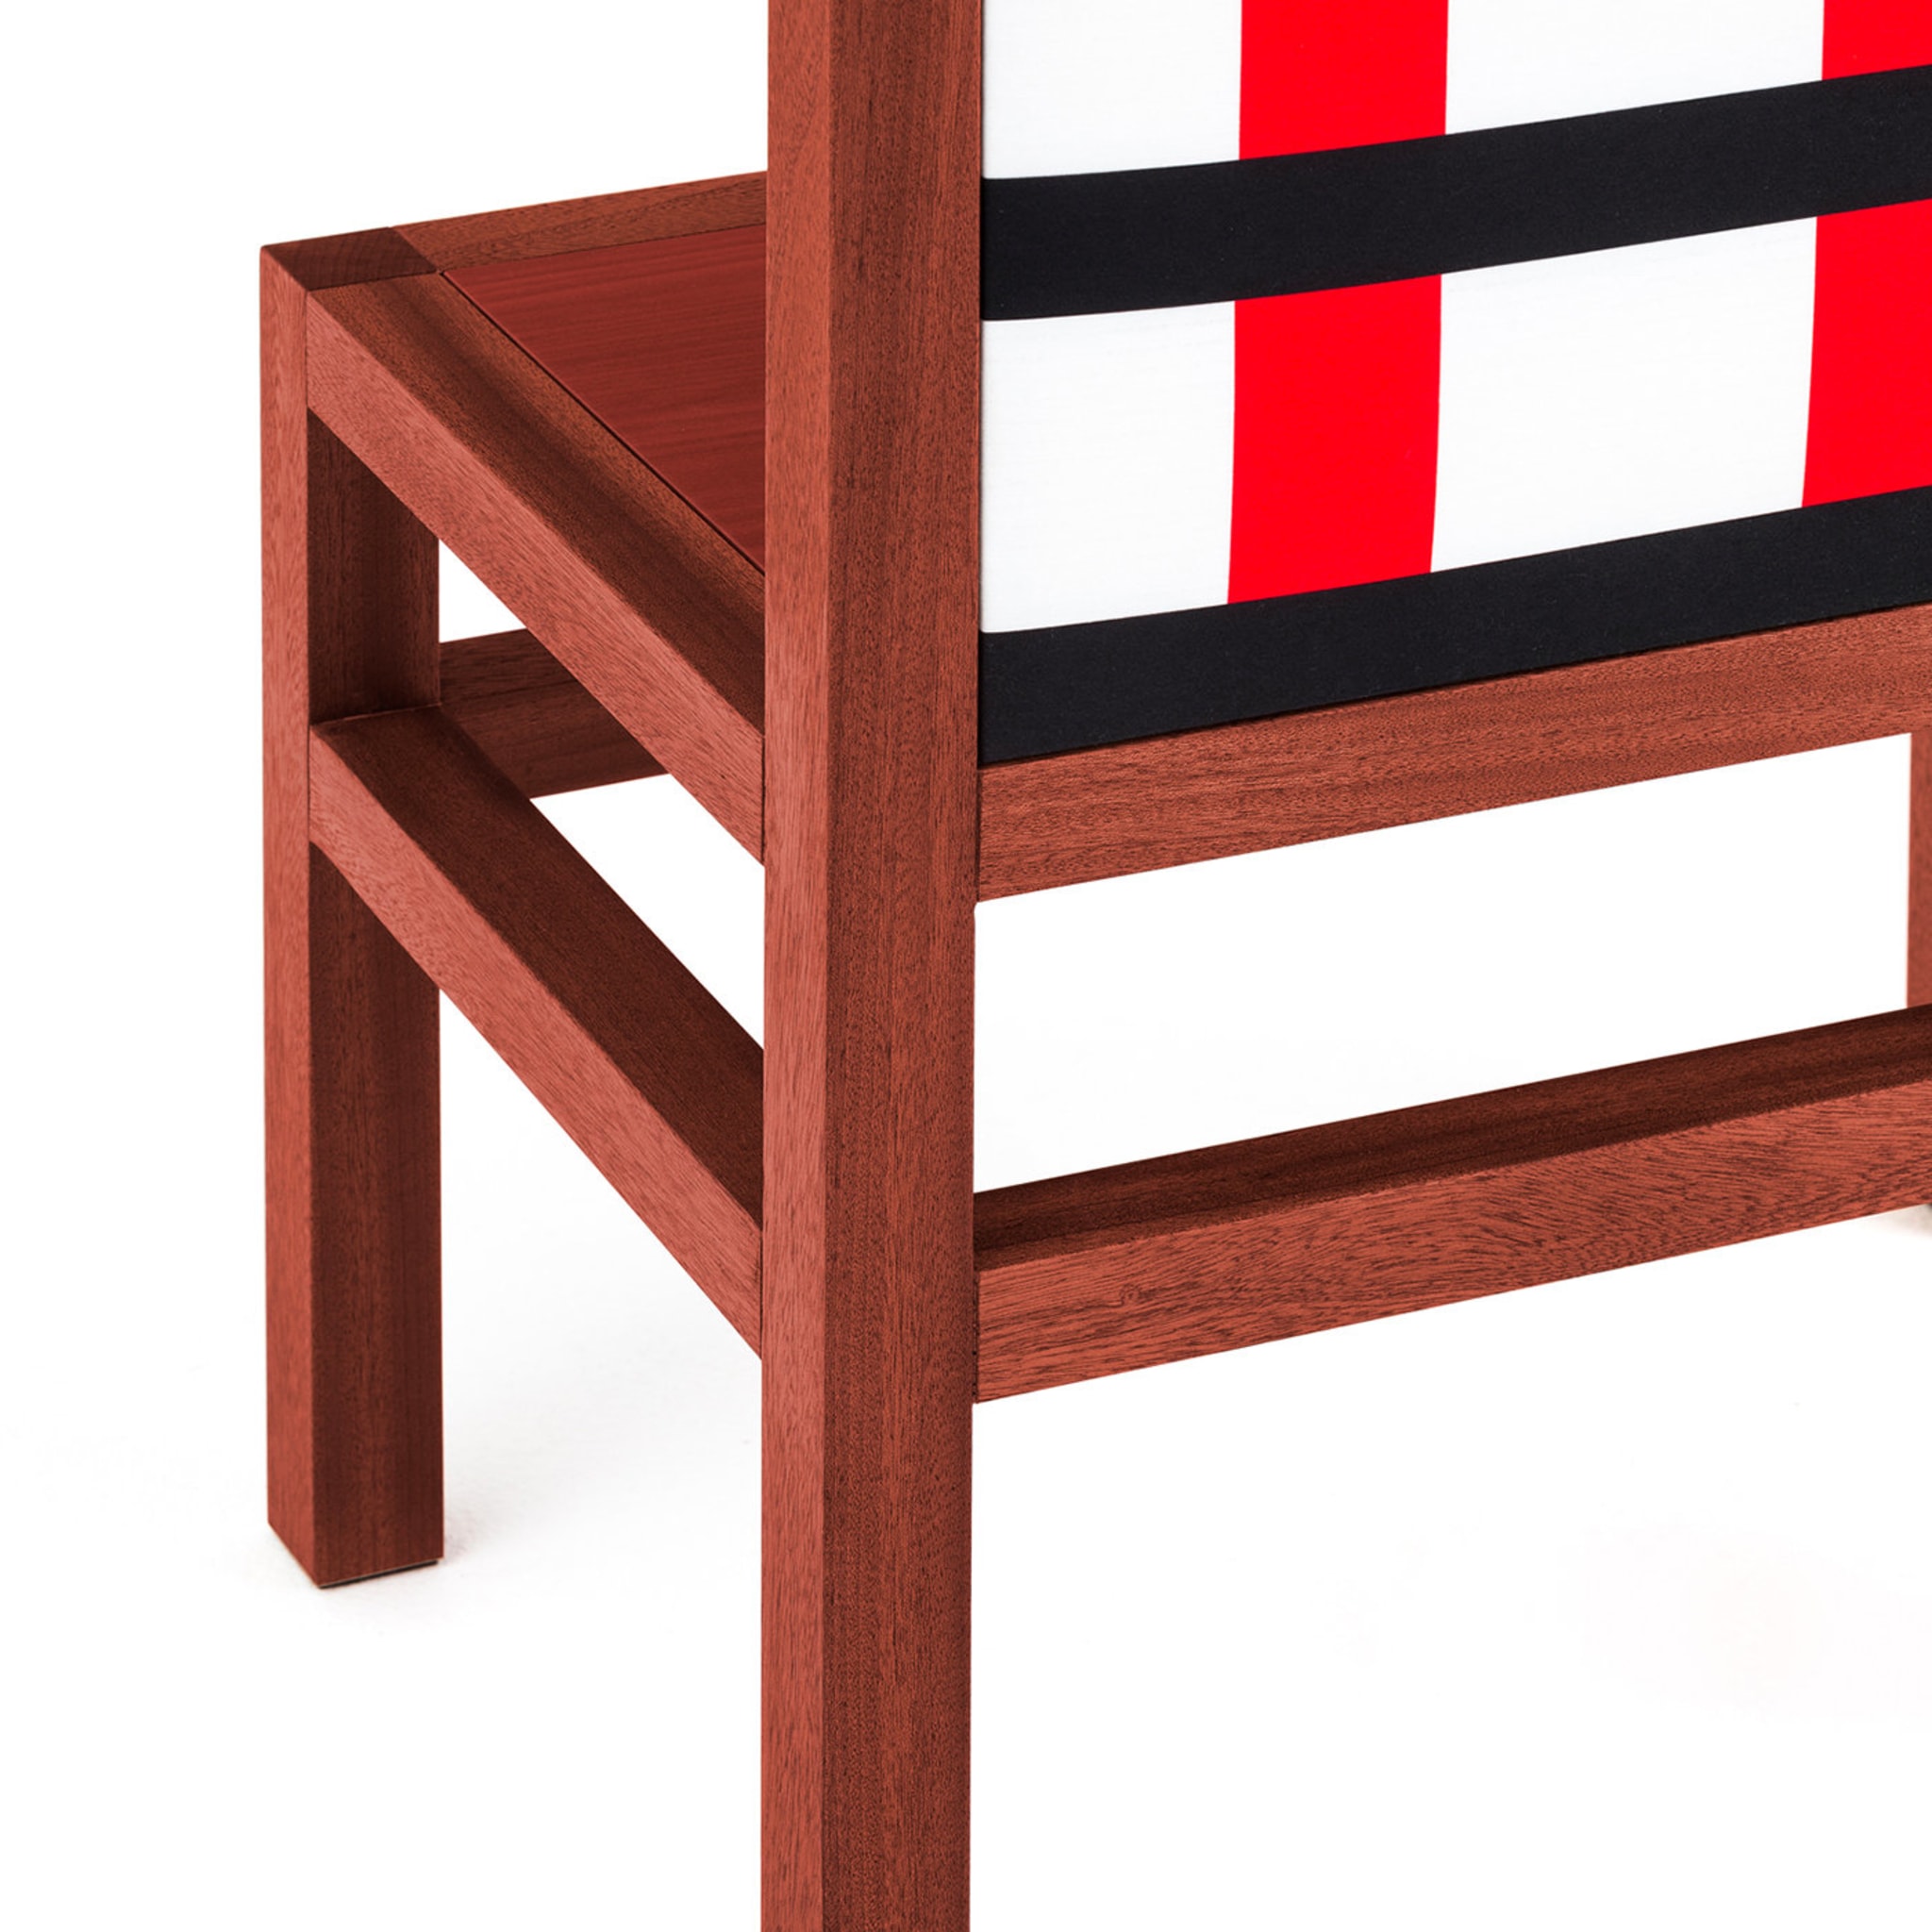 Marmo Chair by Nathalie Du Pasquier - Post Design - Alternative view 1